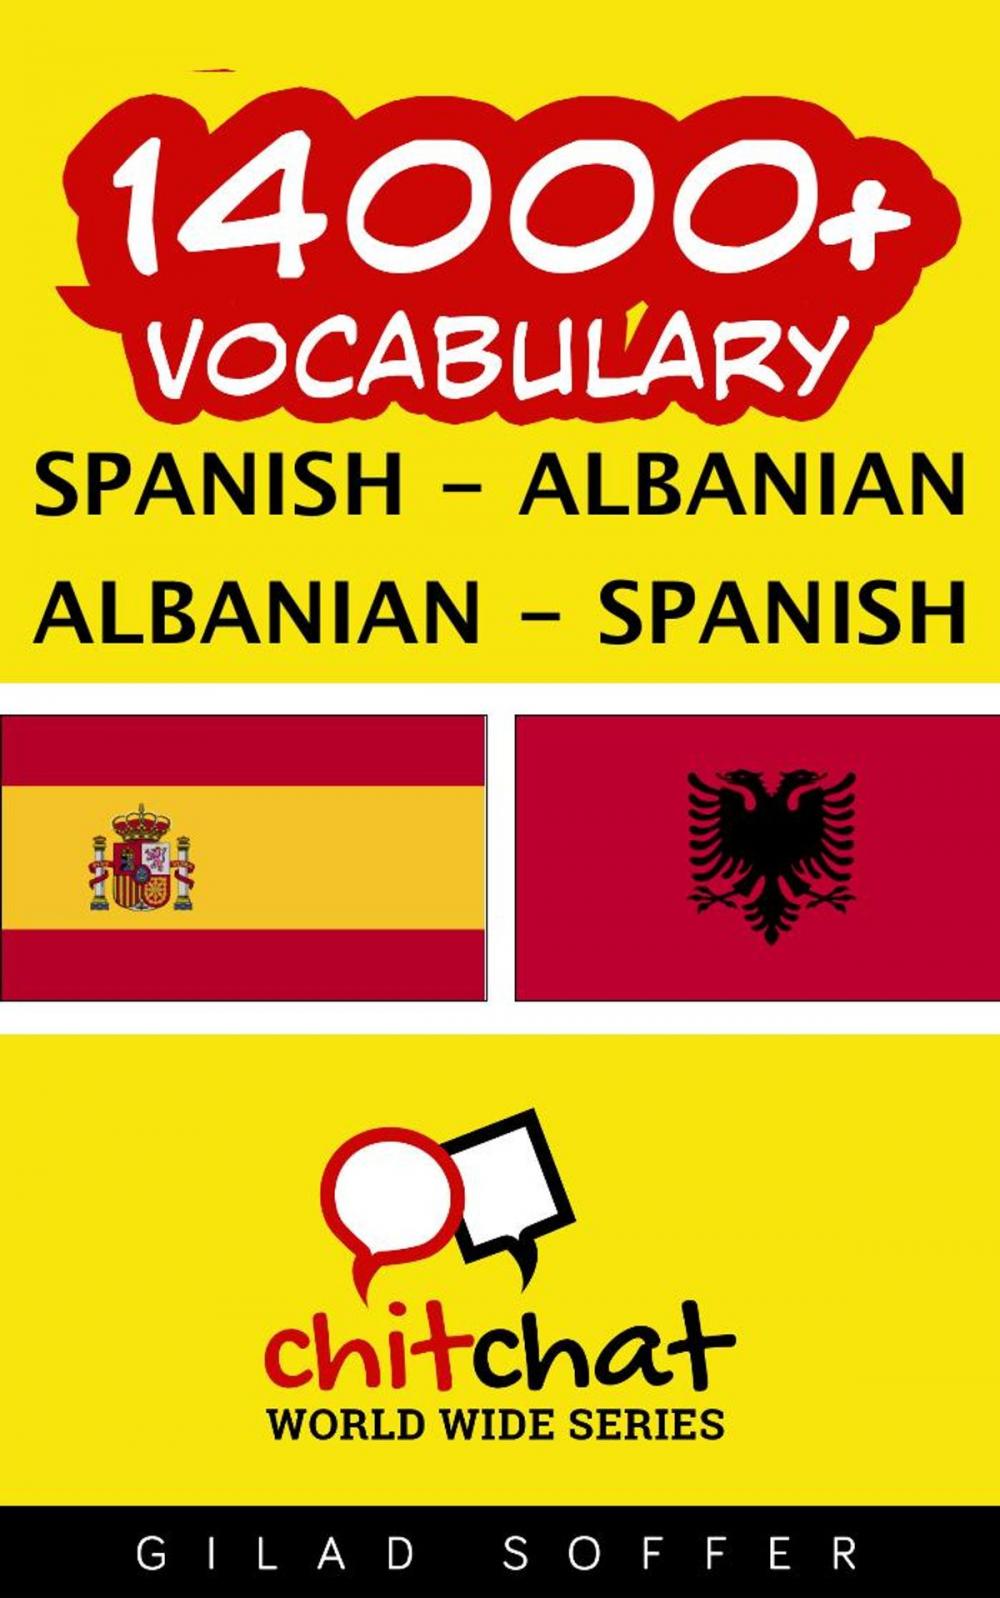 Big bigCover of 14000+ Vocabulary Spanish - Albanian